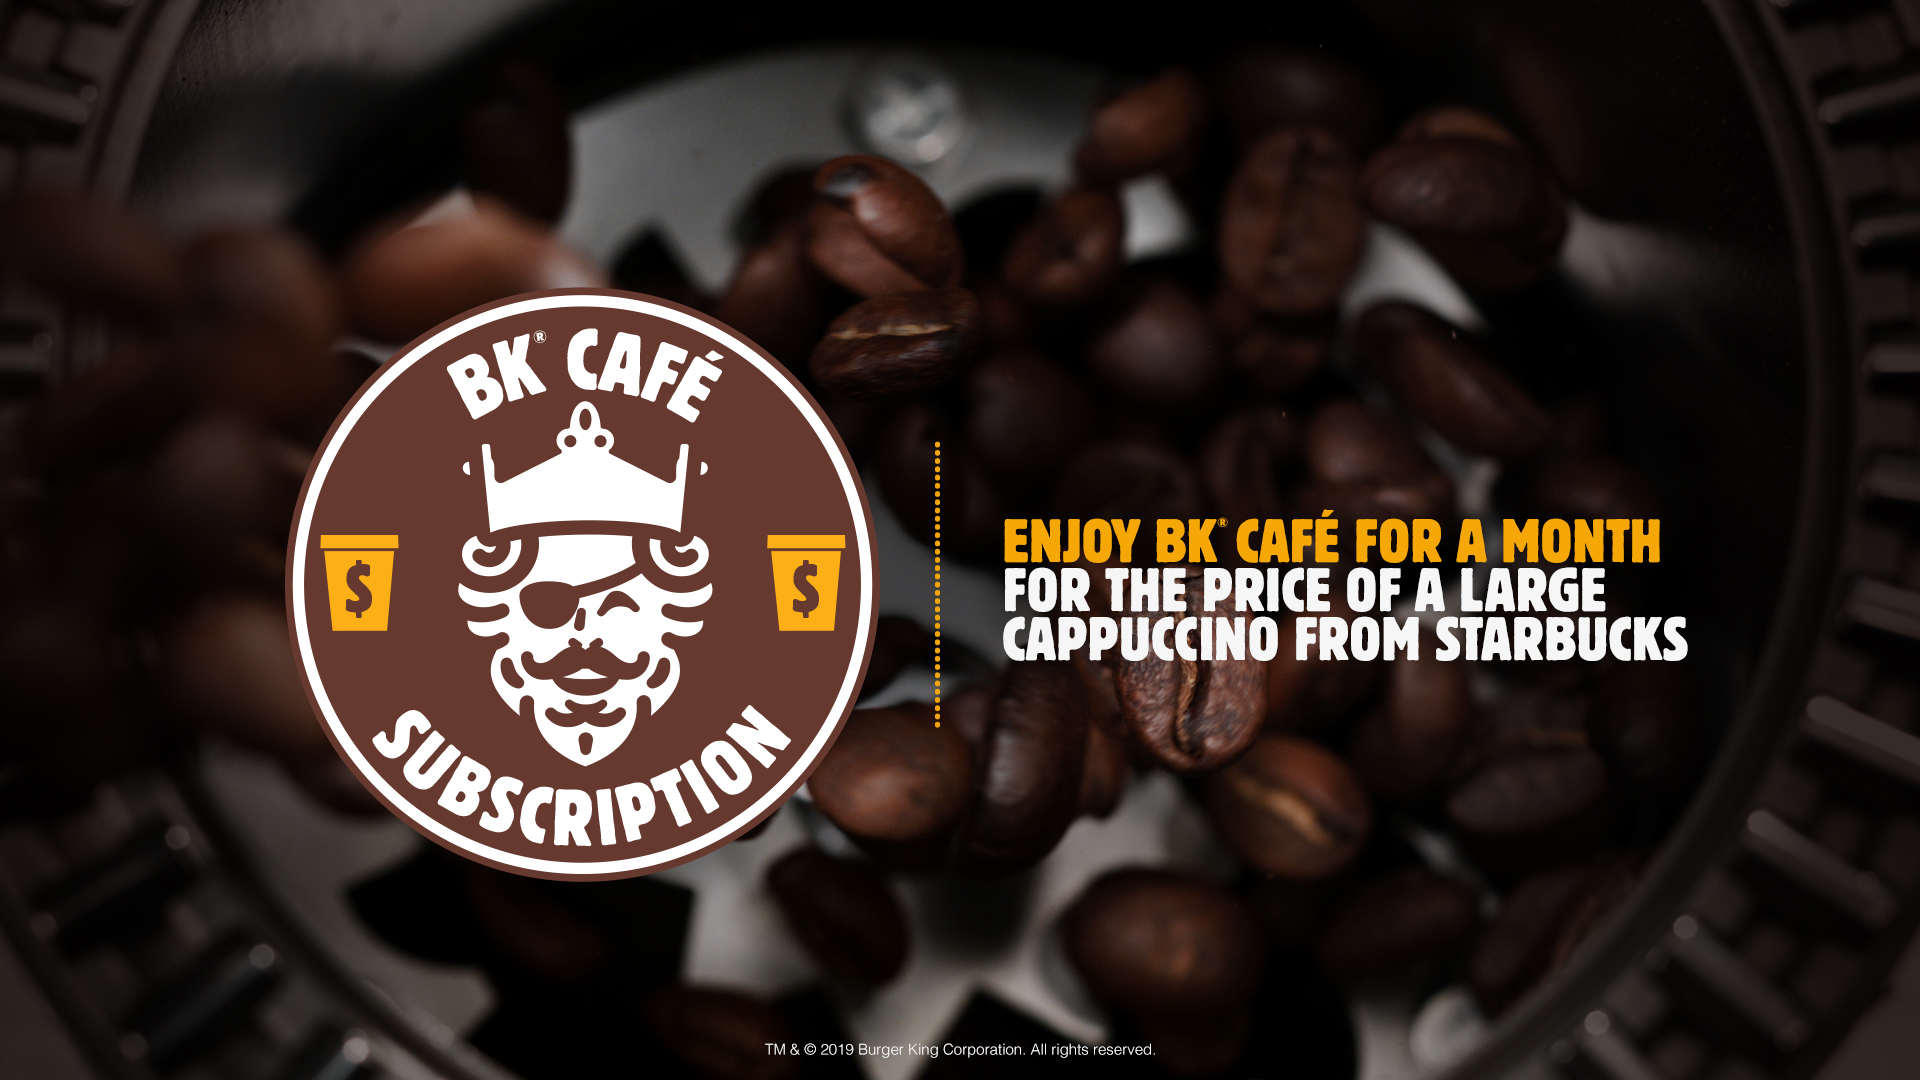 https://mms.businesswire.com/media/20190315005025/en/710728/5/bk-cafe_subscription_KV-BEANS_BKcafe-logo_copyA_FINAL03.jpg